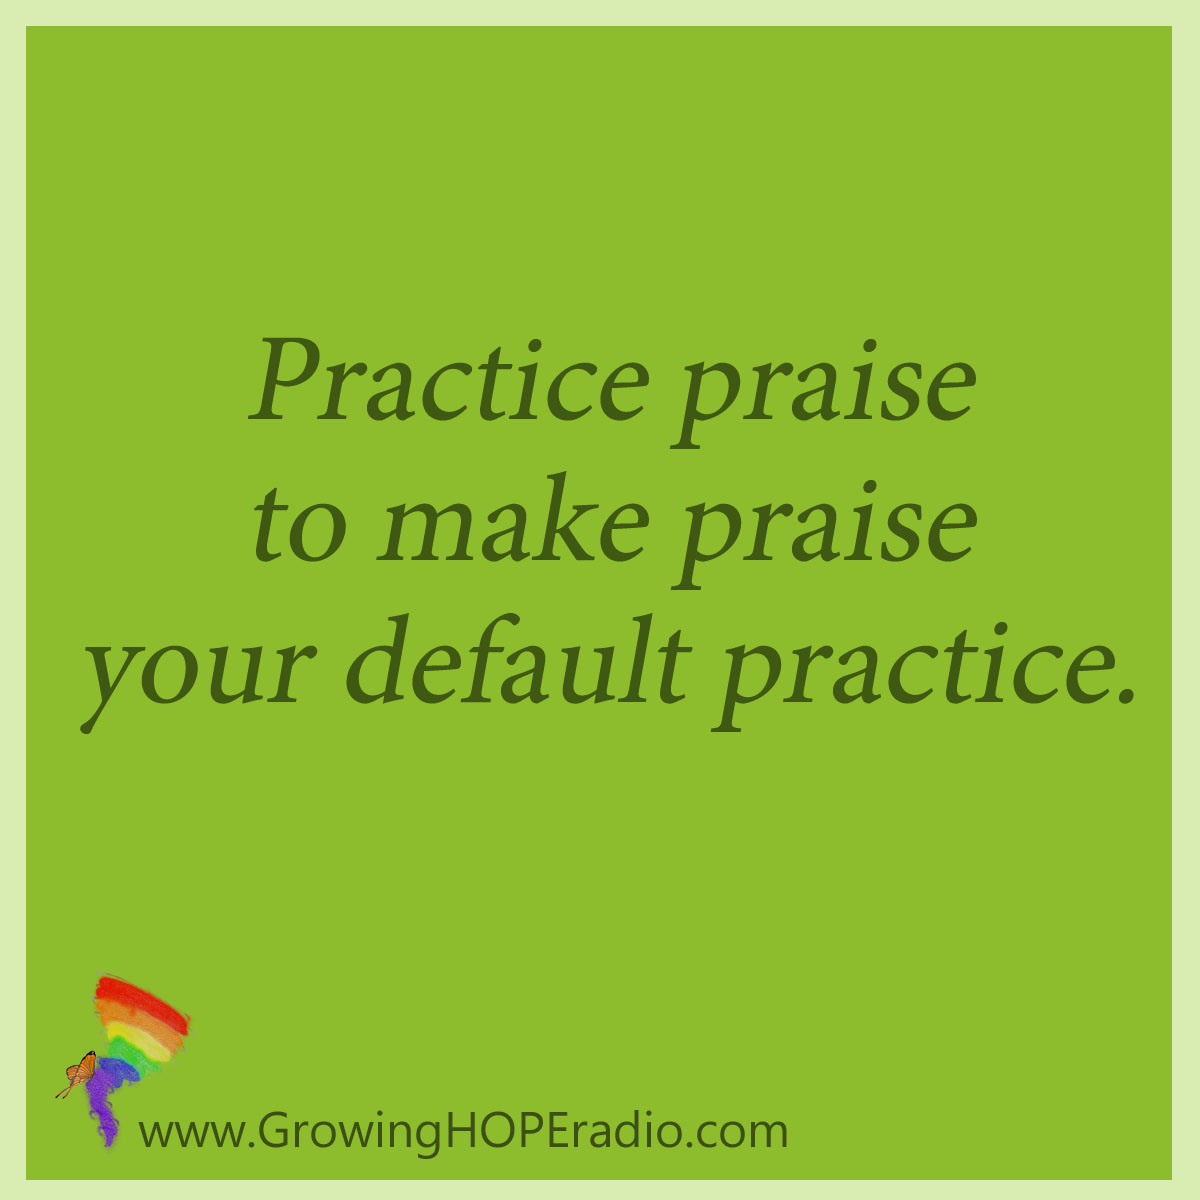 Growing HOPE Daily - practice praise